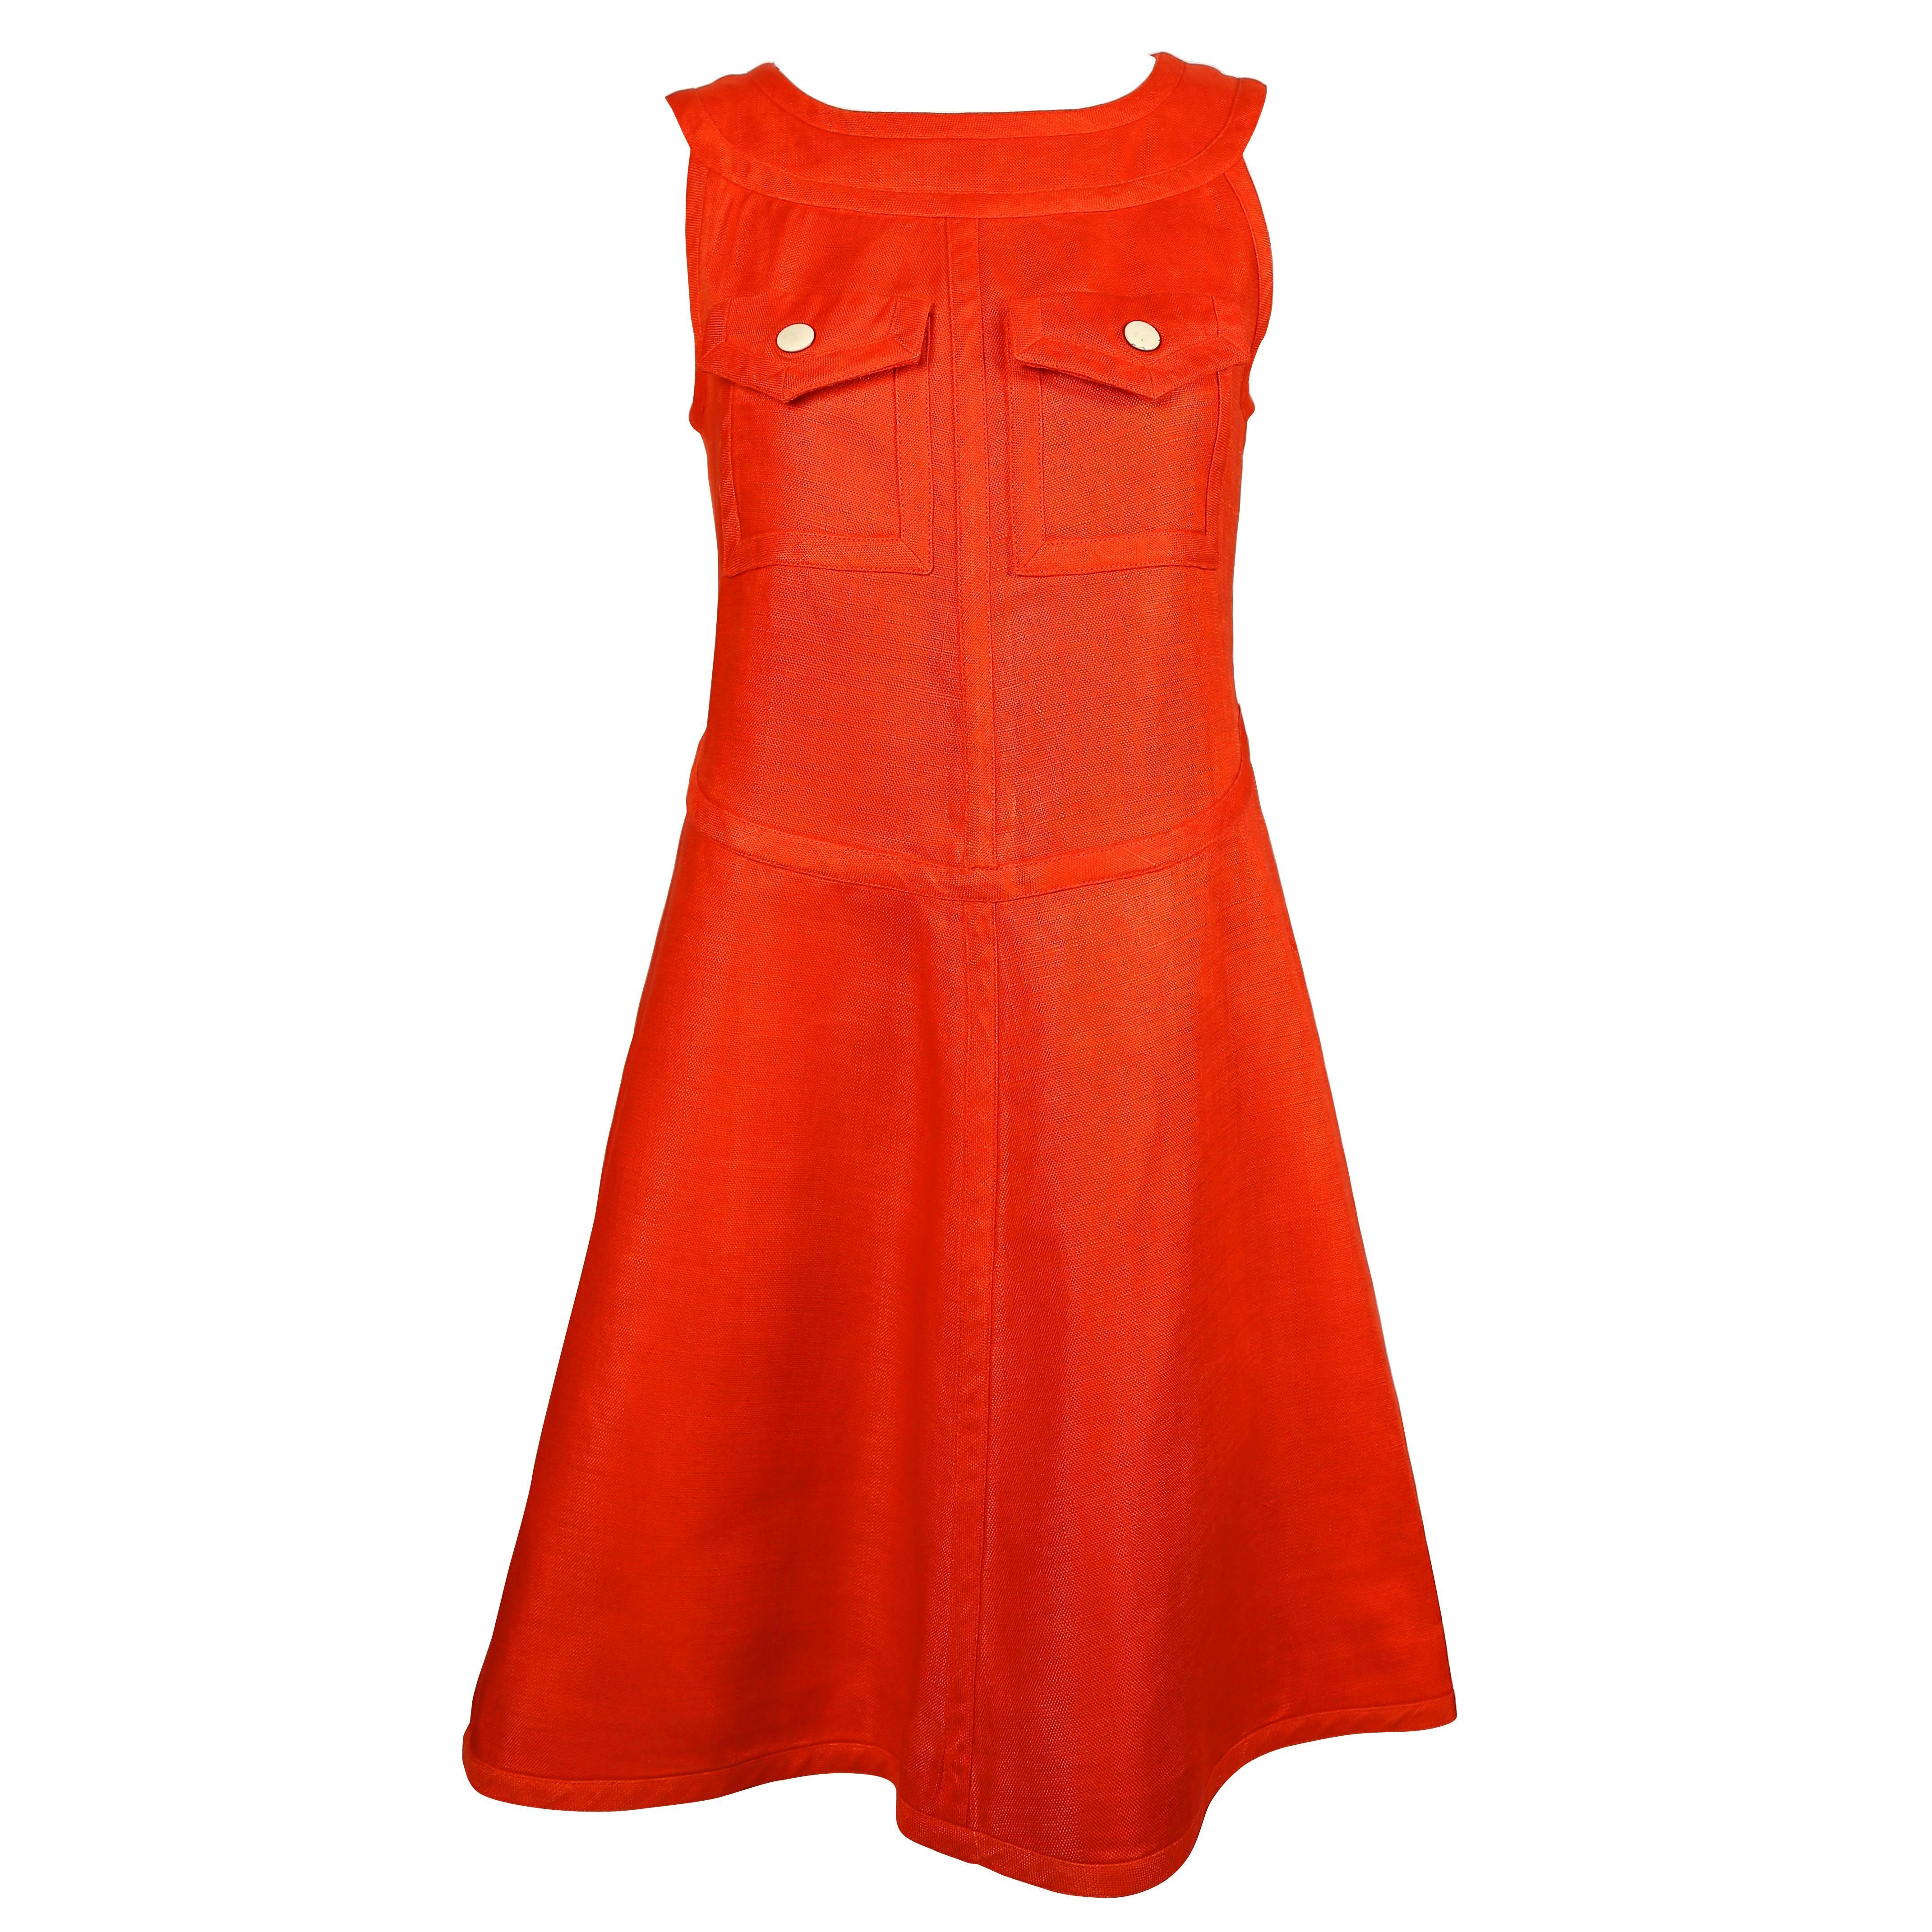 very rare 1960's COURREGES tangerine linen haute couture dress